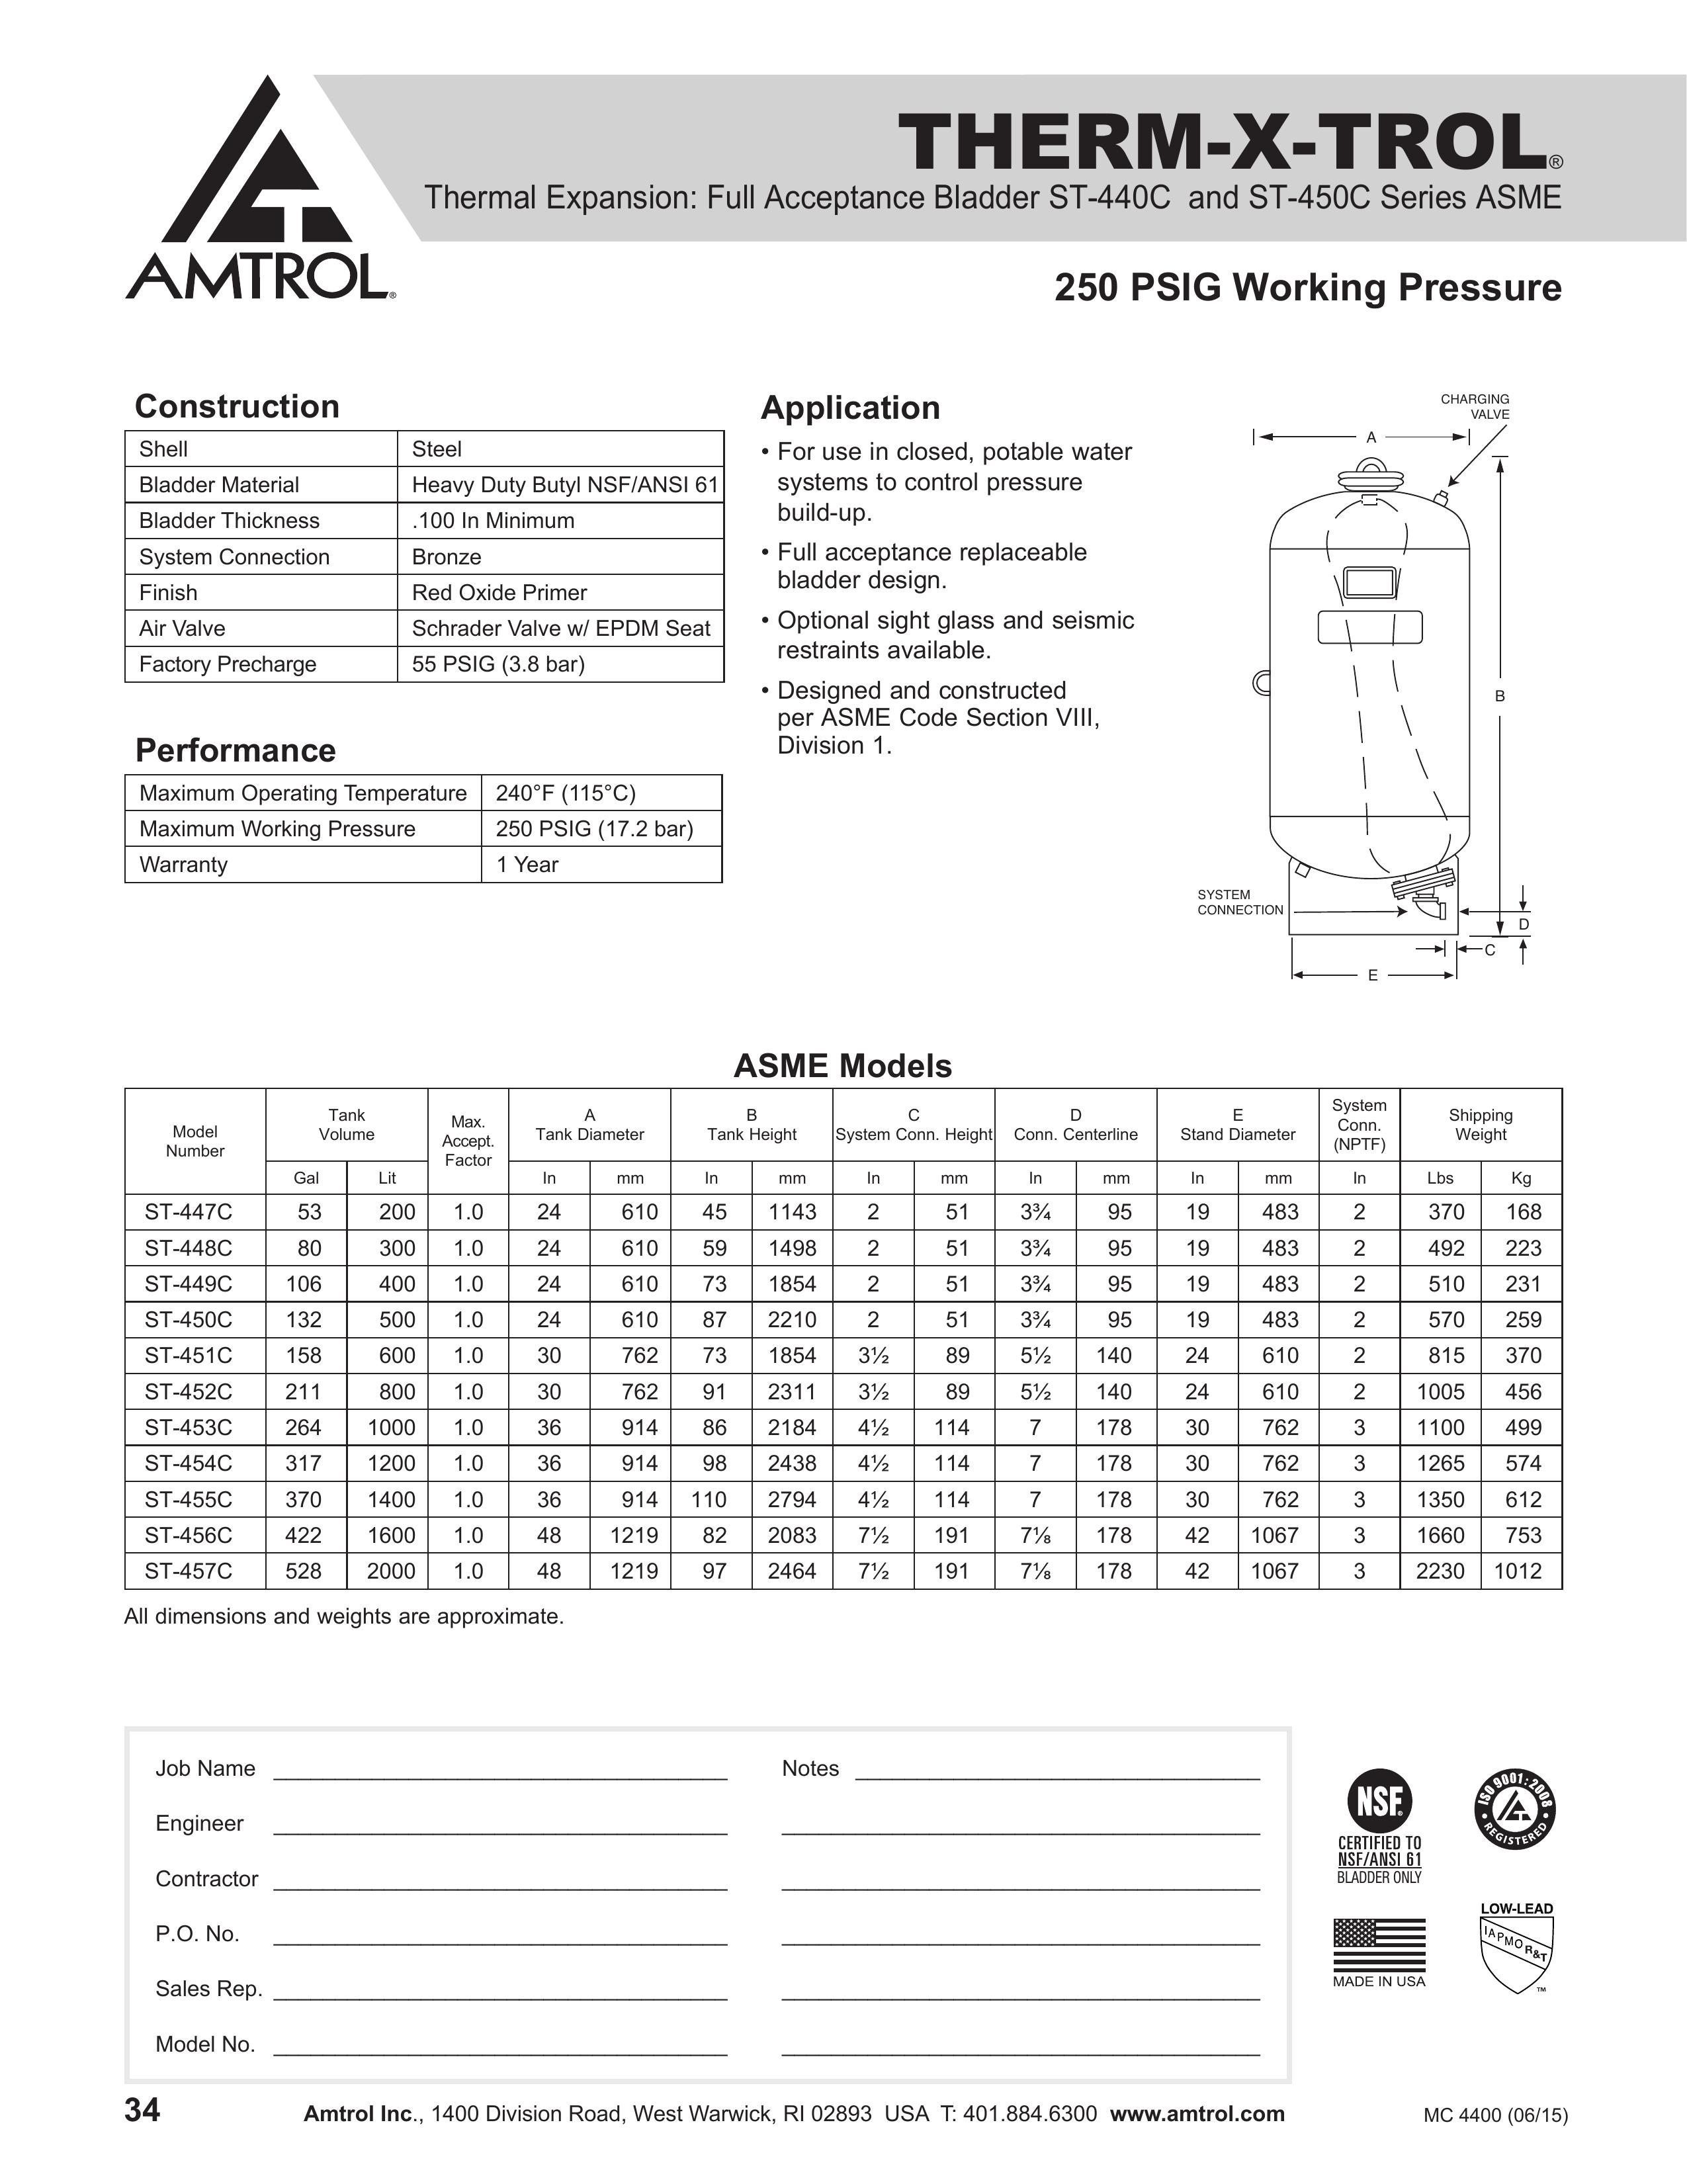 Amtrol ST-450C Slow Cooker User Manual